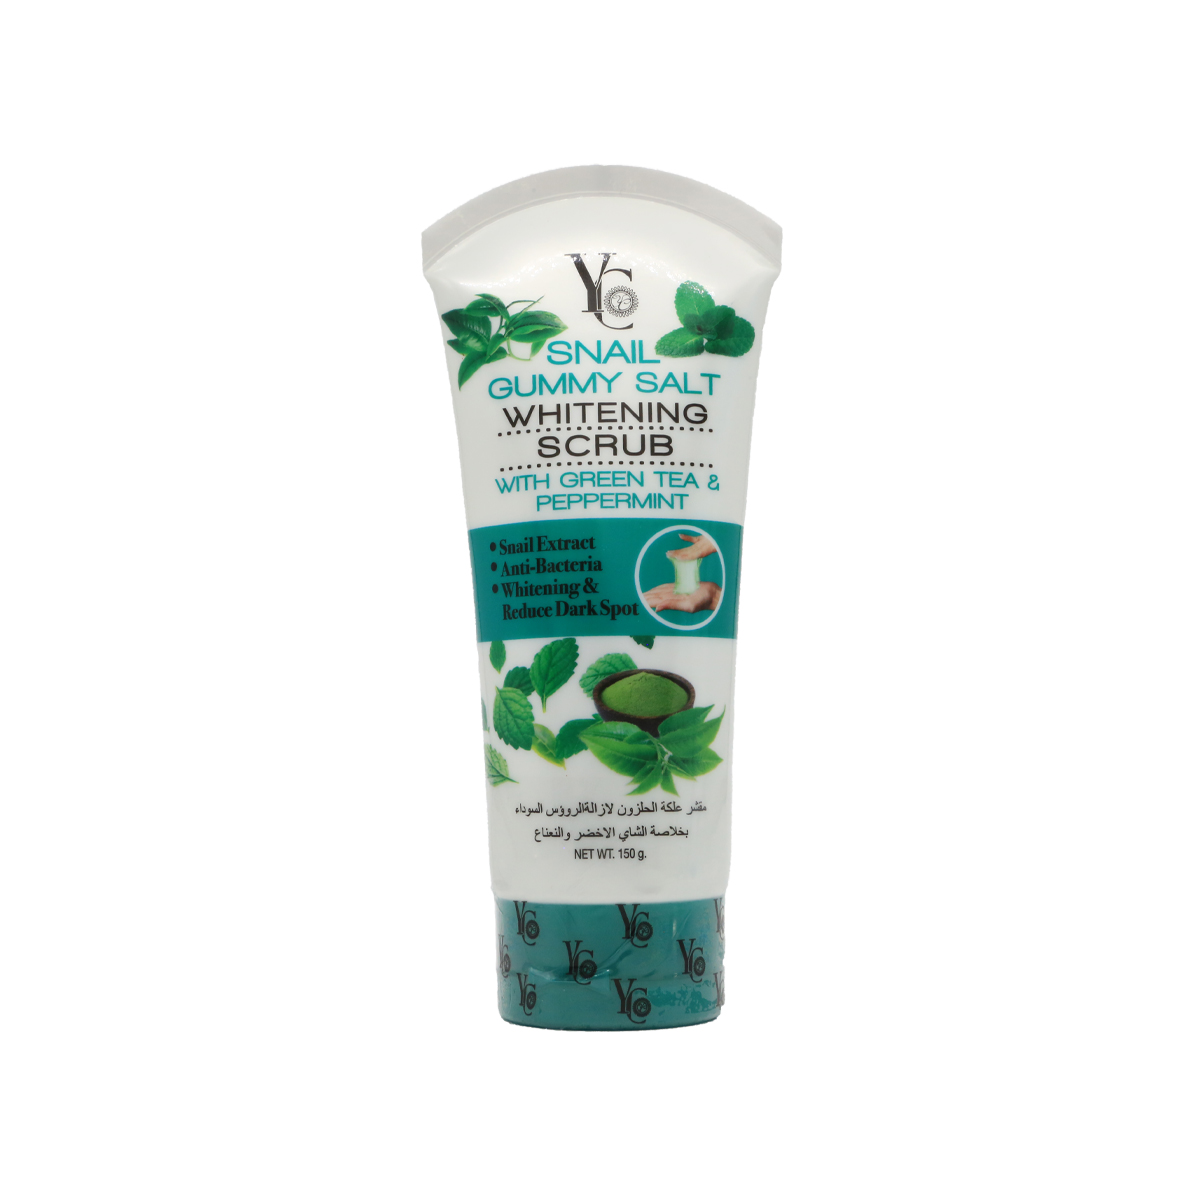 128-8859362509162-YC-767-Yong Chin Snail Gummy Salt Whitening Scrub with Green Tea & Peppermint 150g